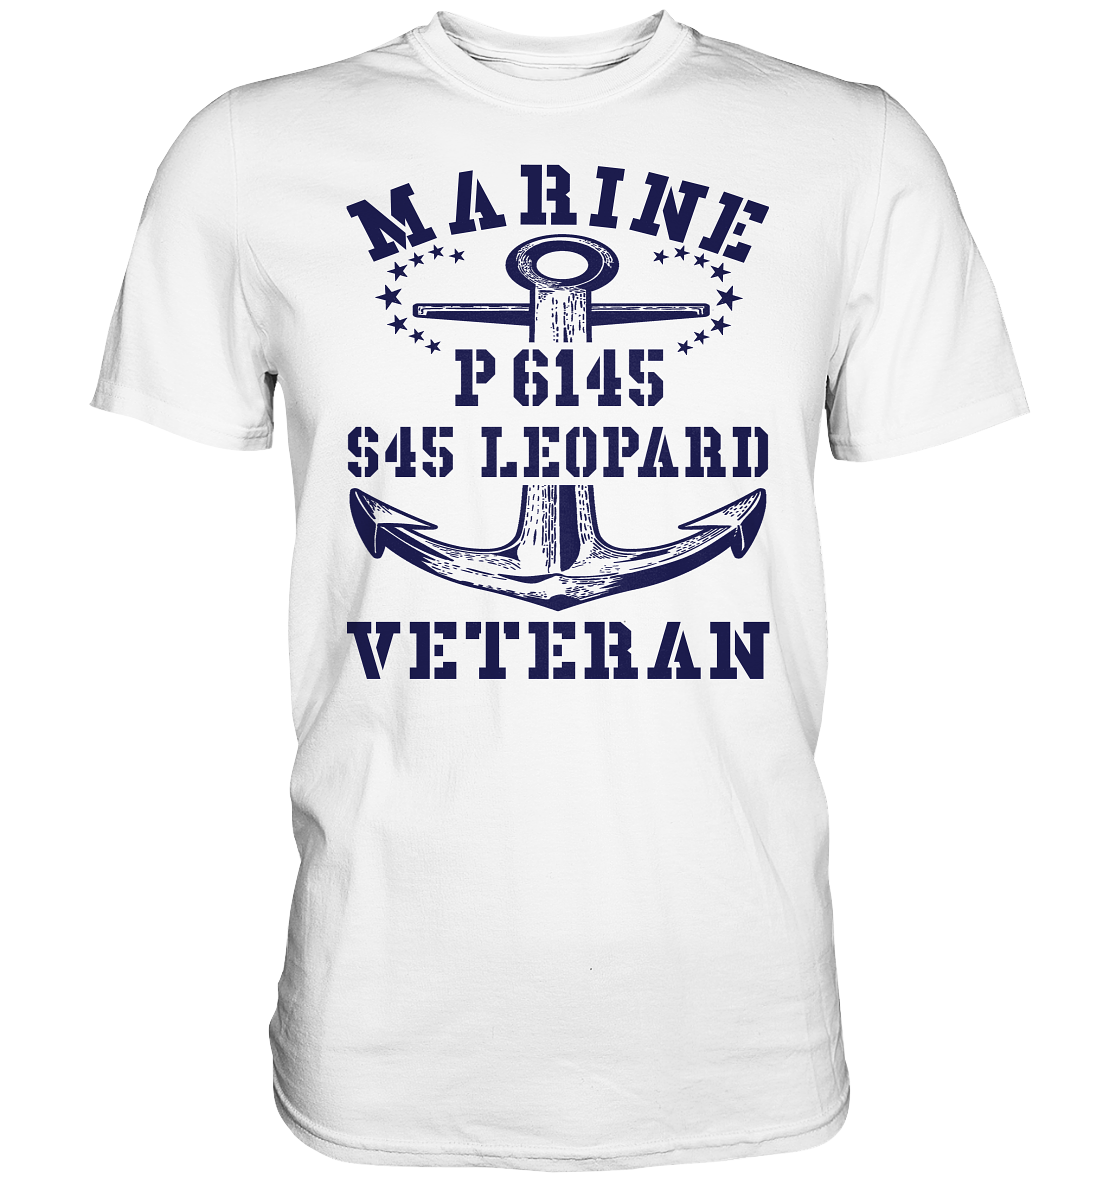 P6145 S45 LEOPARD Marine Veteran - Premium Shirt